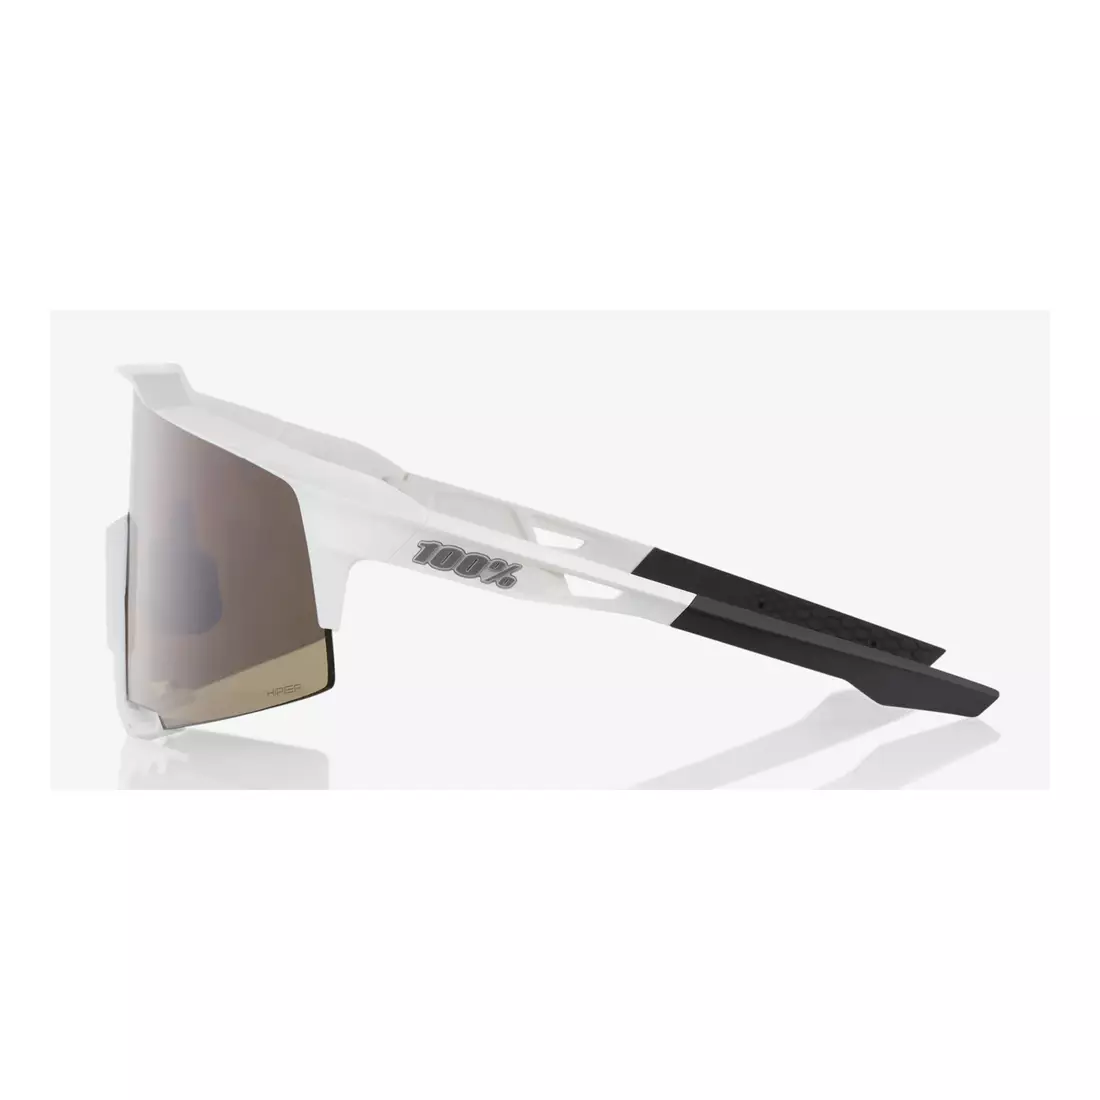 100% okulary sportowe SPEEDCRAFT (HiPER Silver Mirror Lens) Matte White STO-61001-404-03